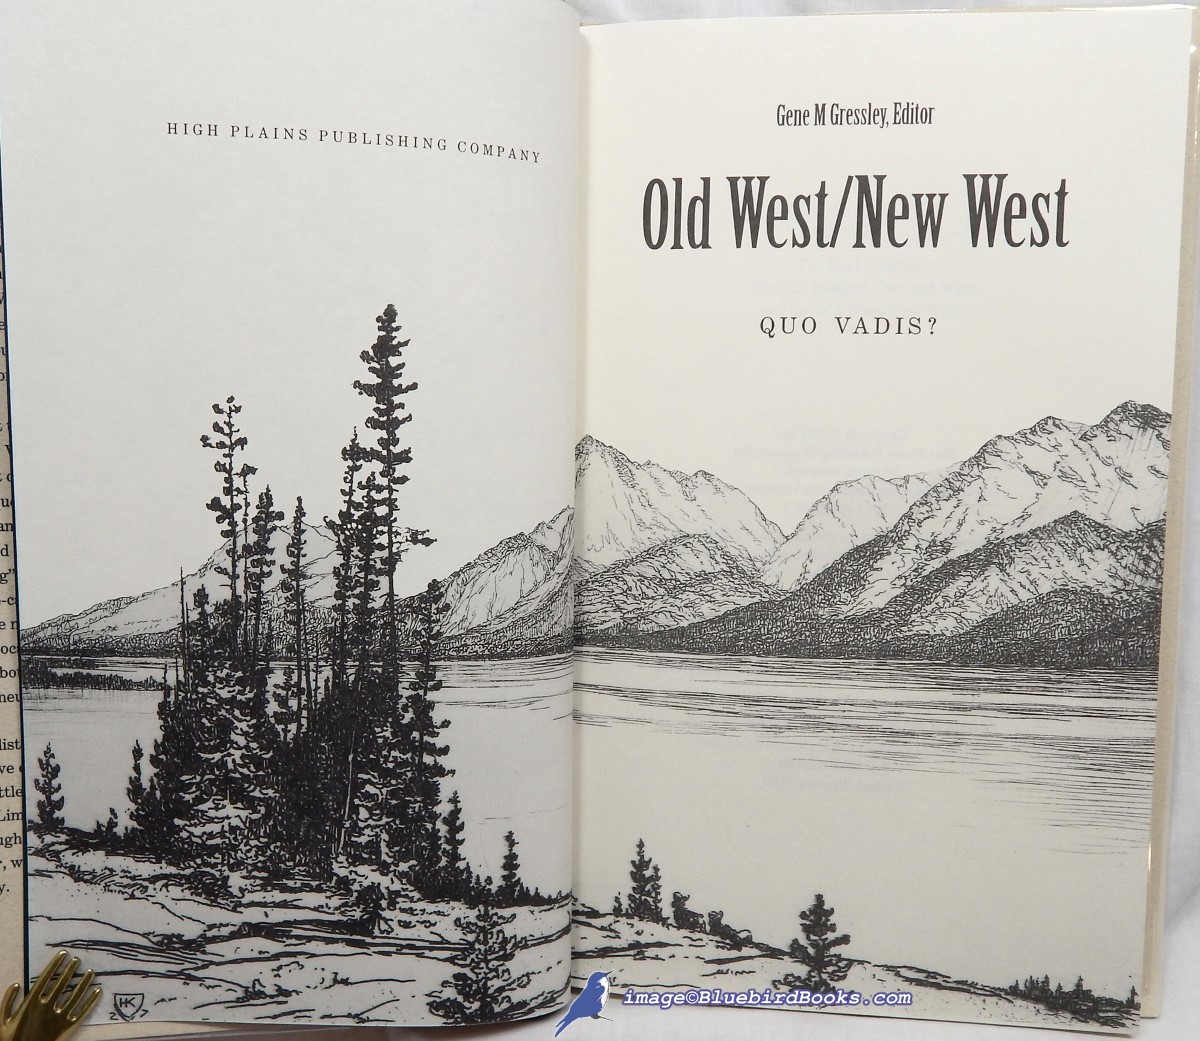 GRESSLEY, GENE M. (EDITOR) - Old West / New West: Quo Vadis?